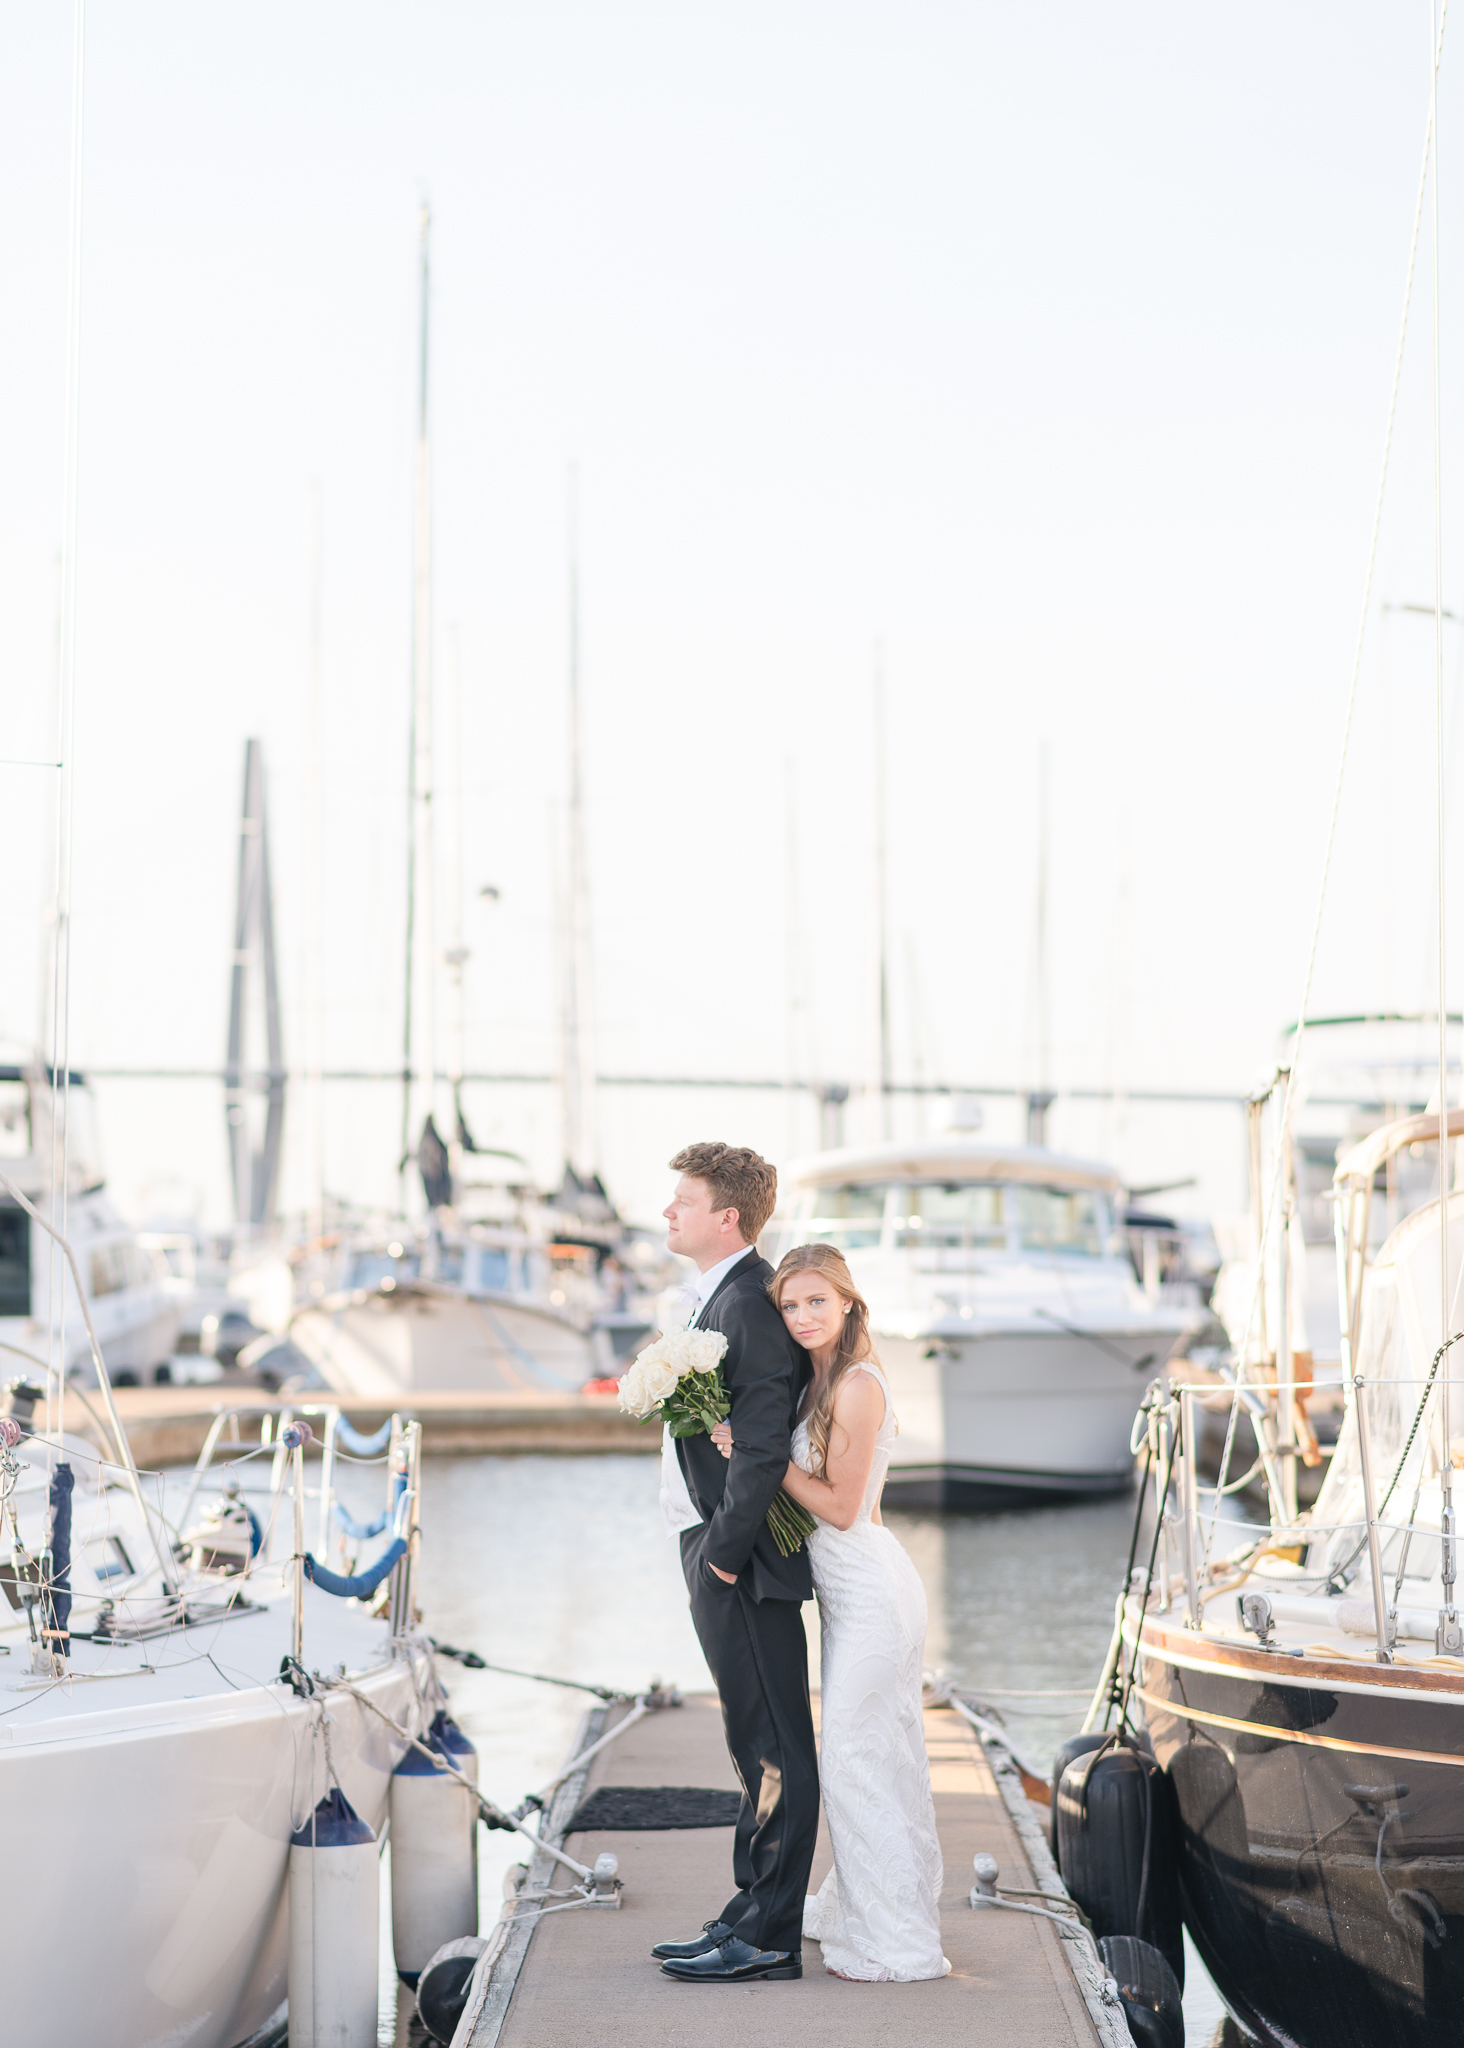 Bride hugging her groom standing on a boat dock